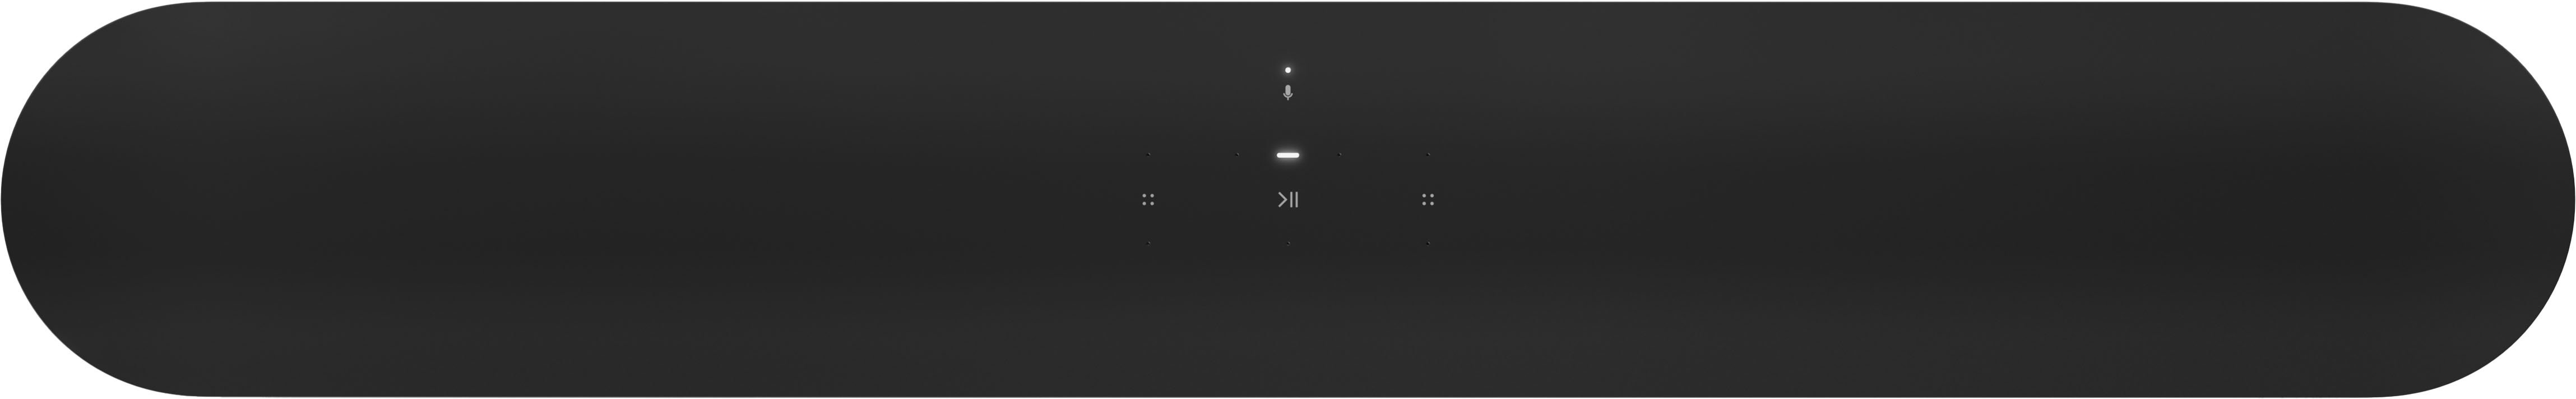 Angle View: Sonos - Beam (Gen 2) - Black